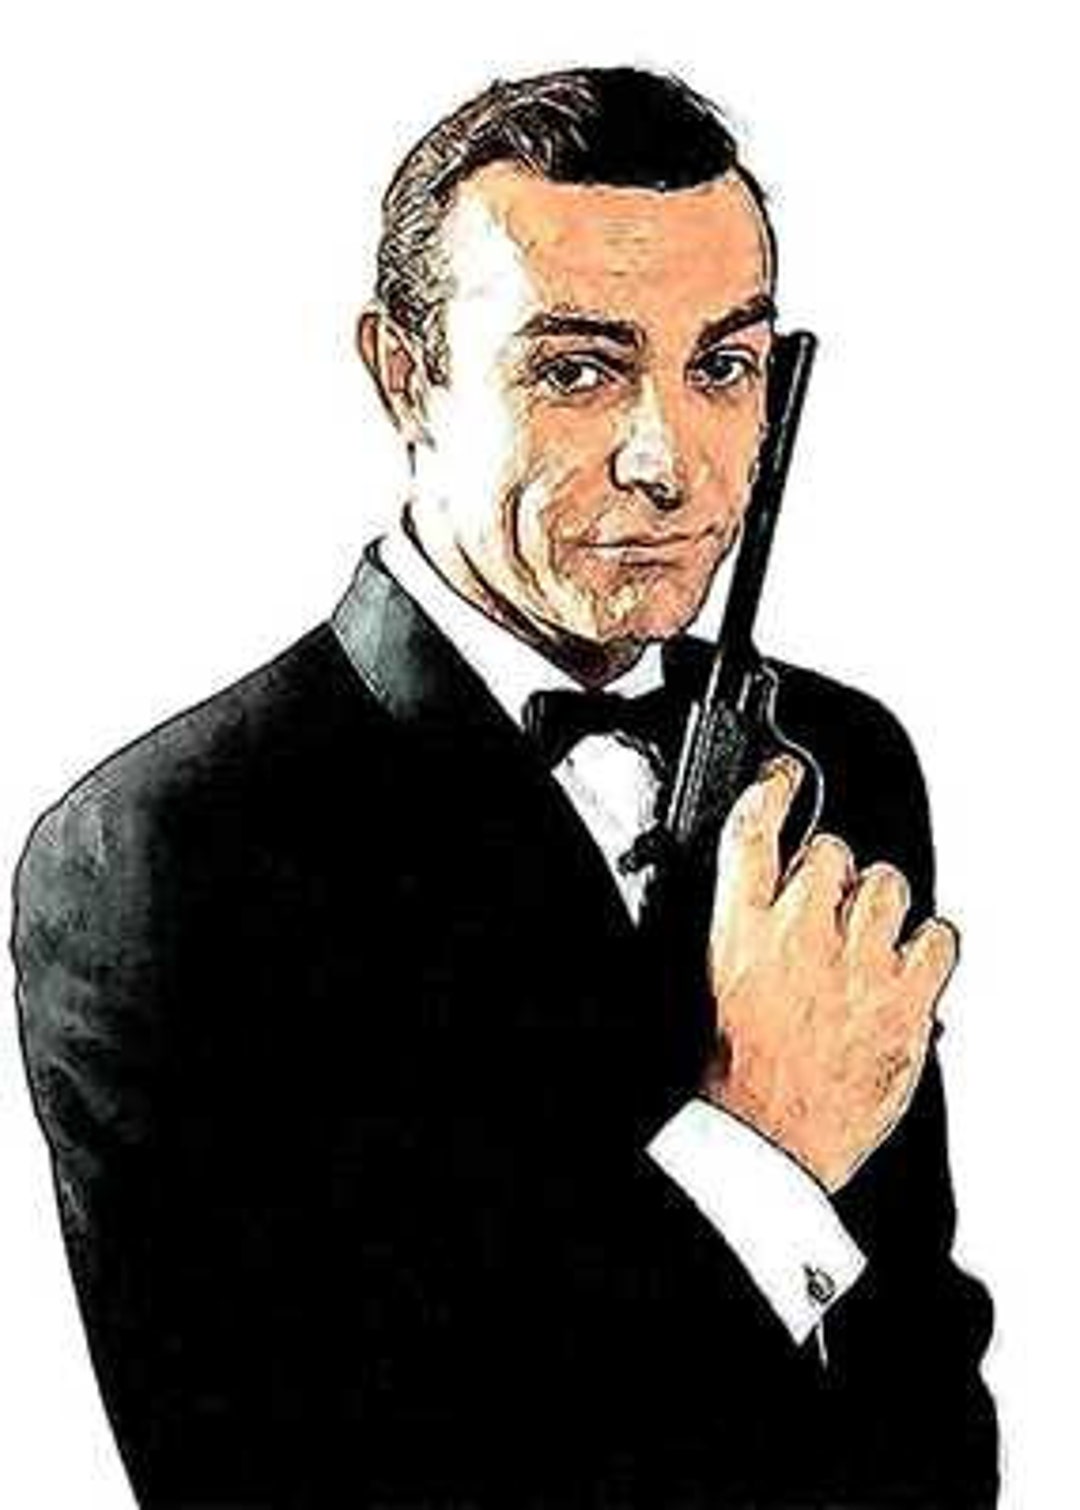 James Bond 007 - Connery Art Print